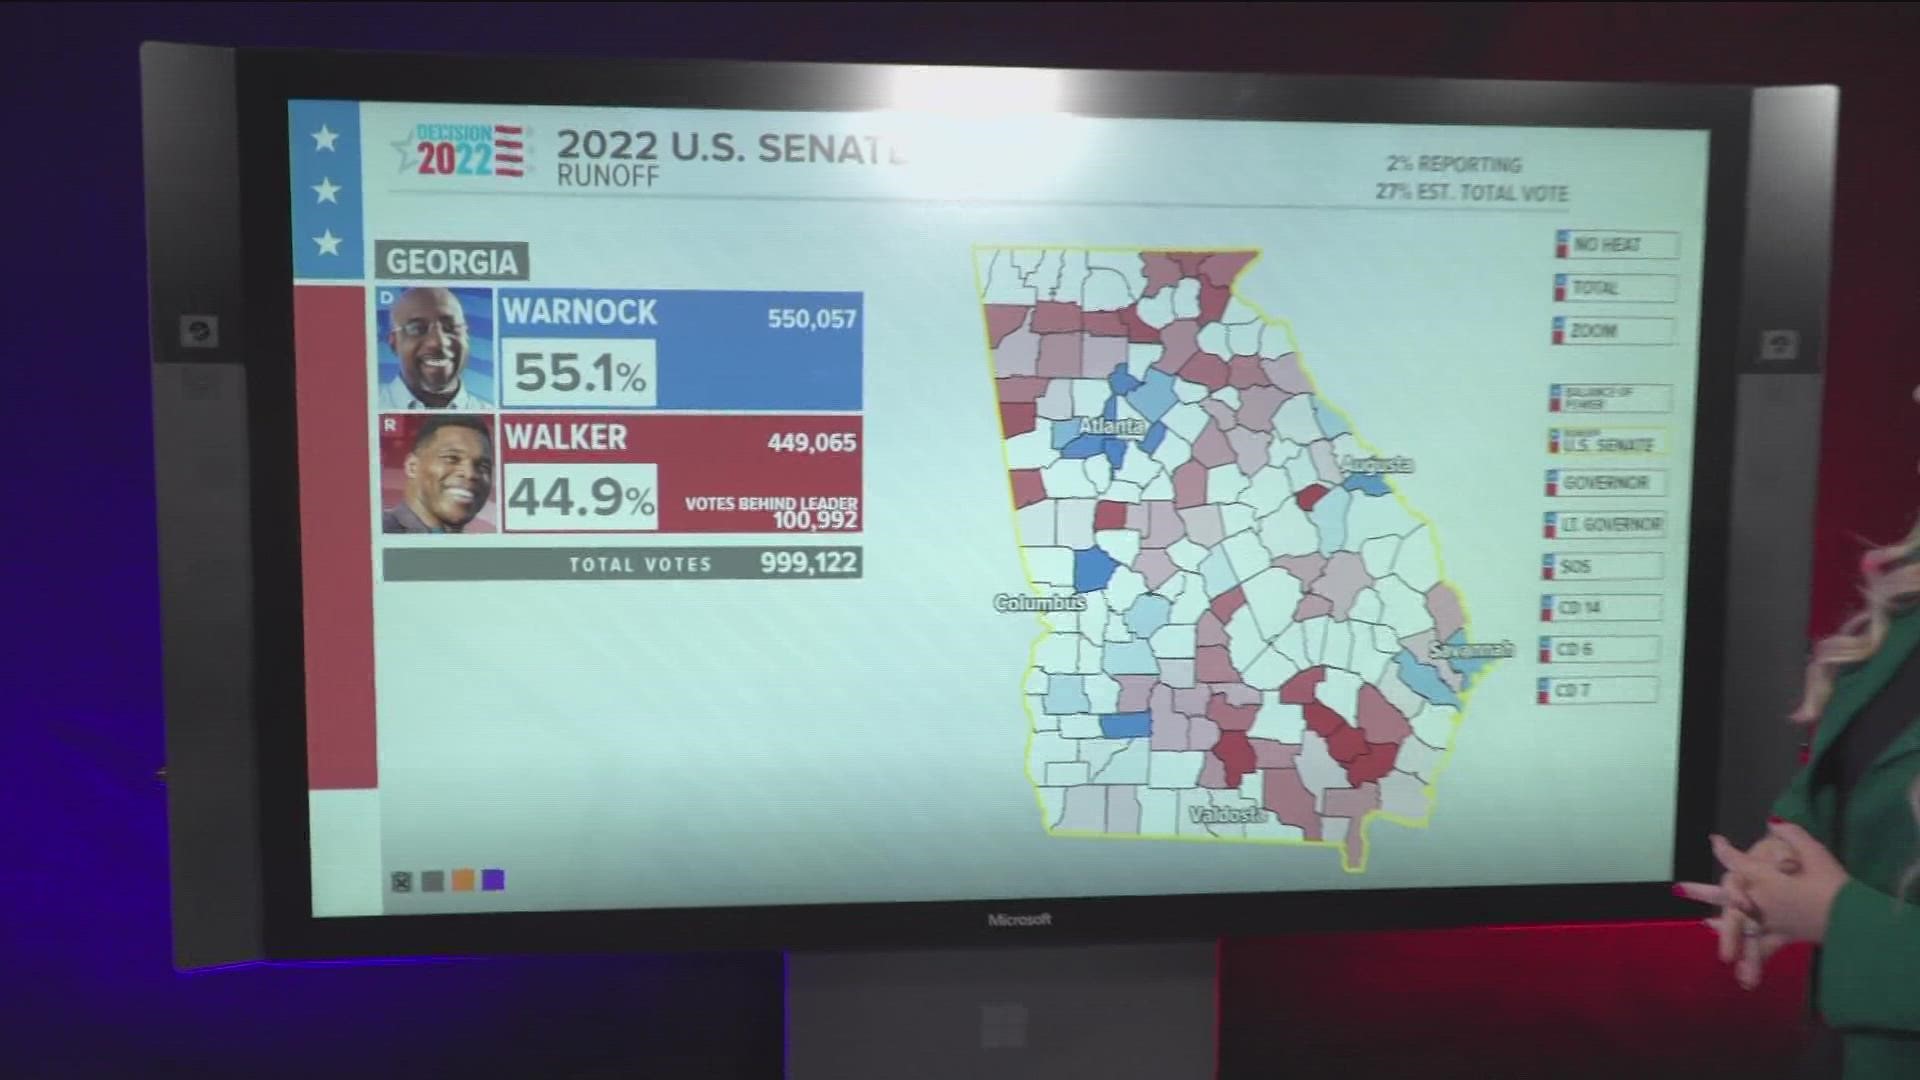 Senate runoff election results Countybycounty breakdown